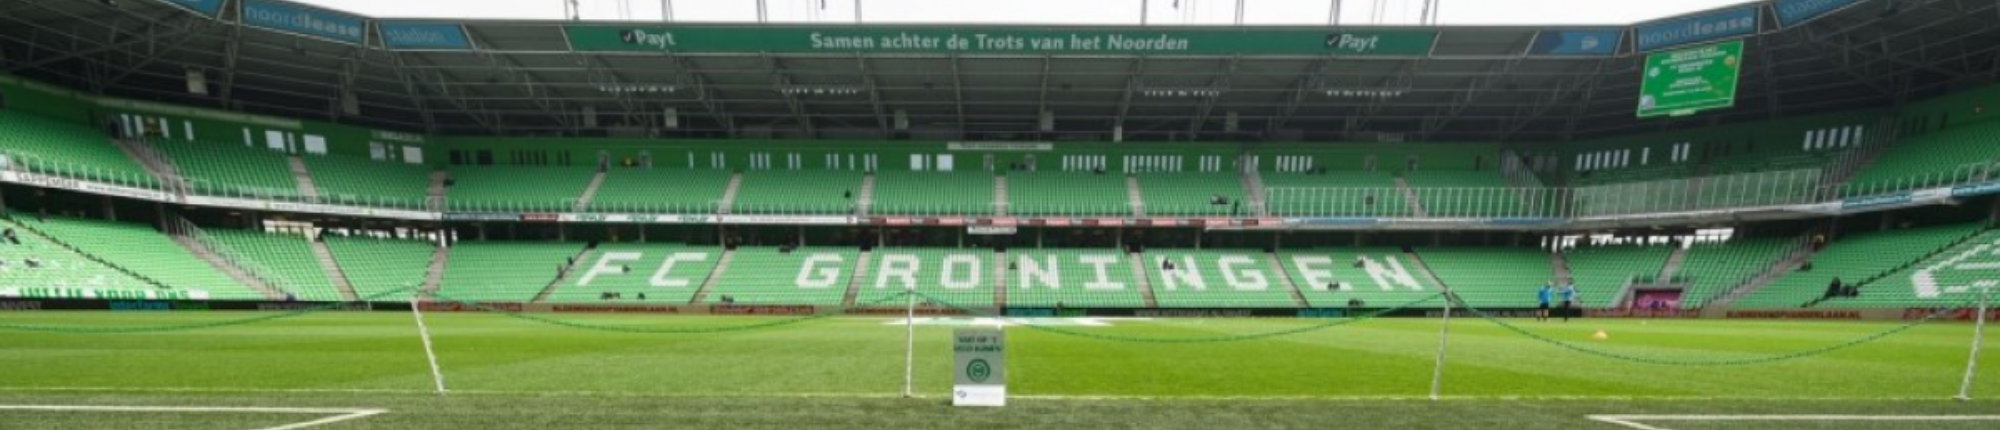 Young Rabo Noord meets FC Groningen